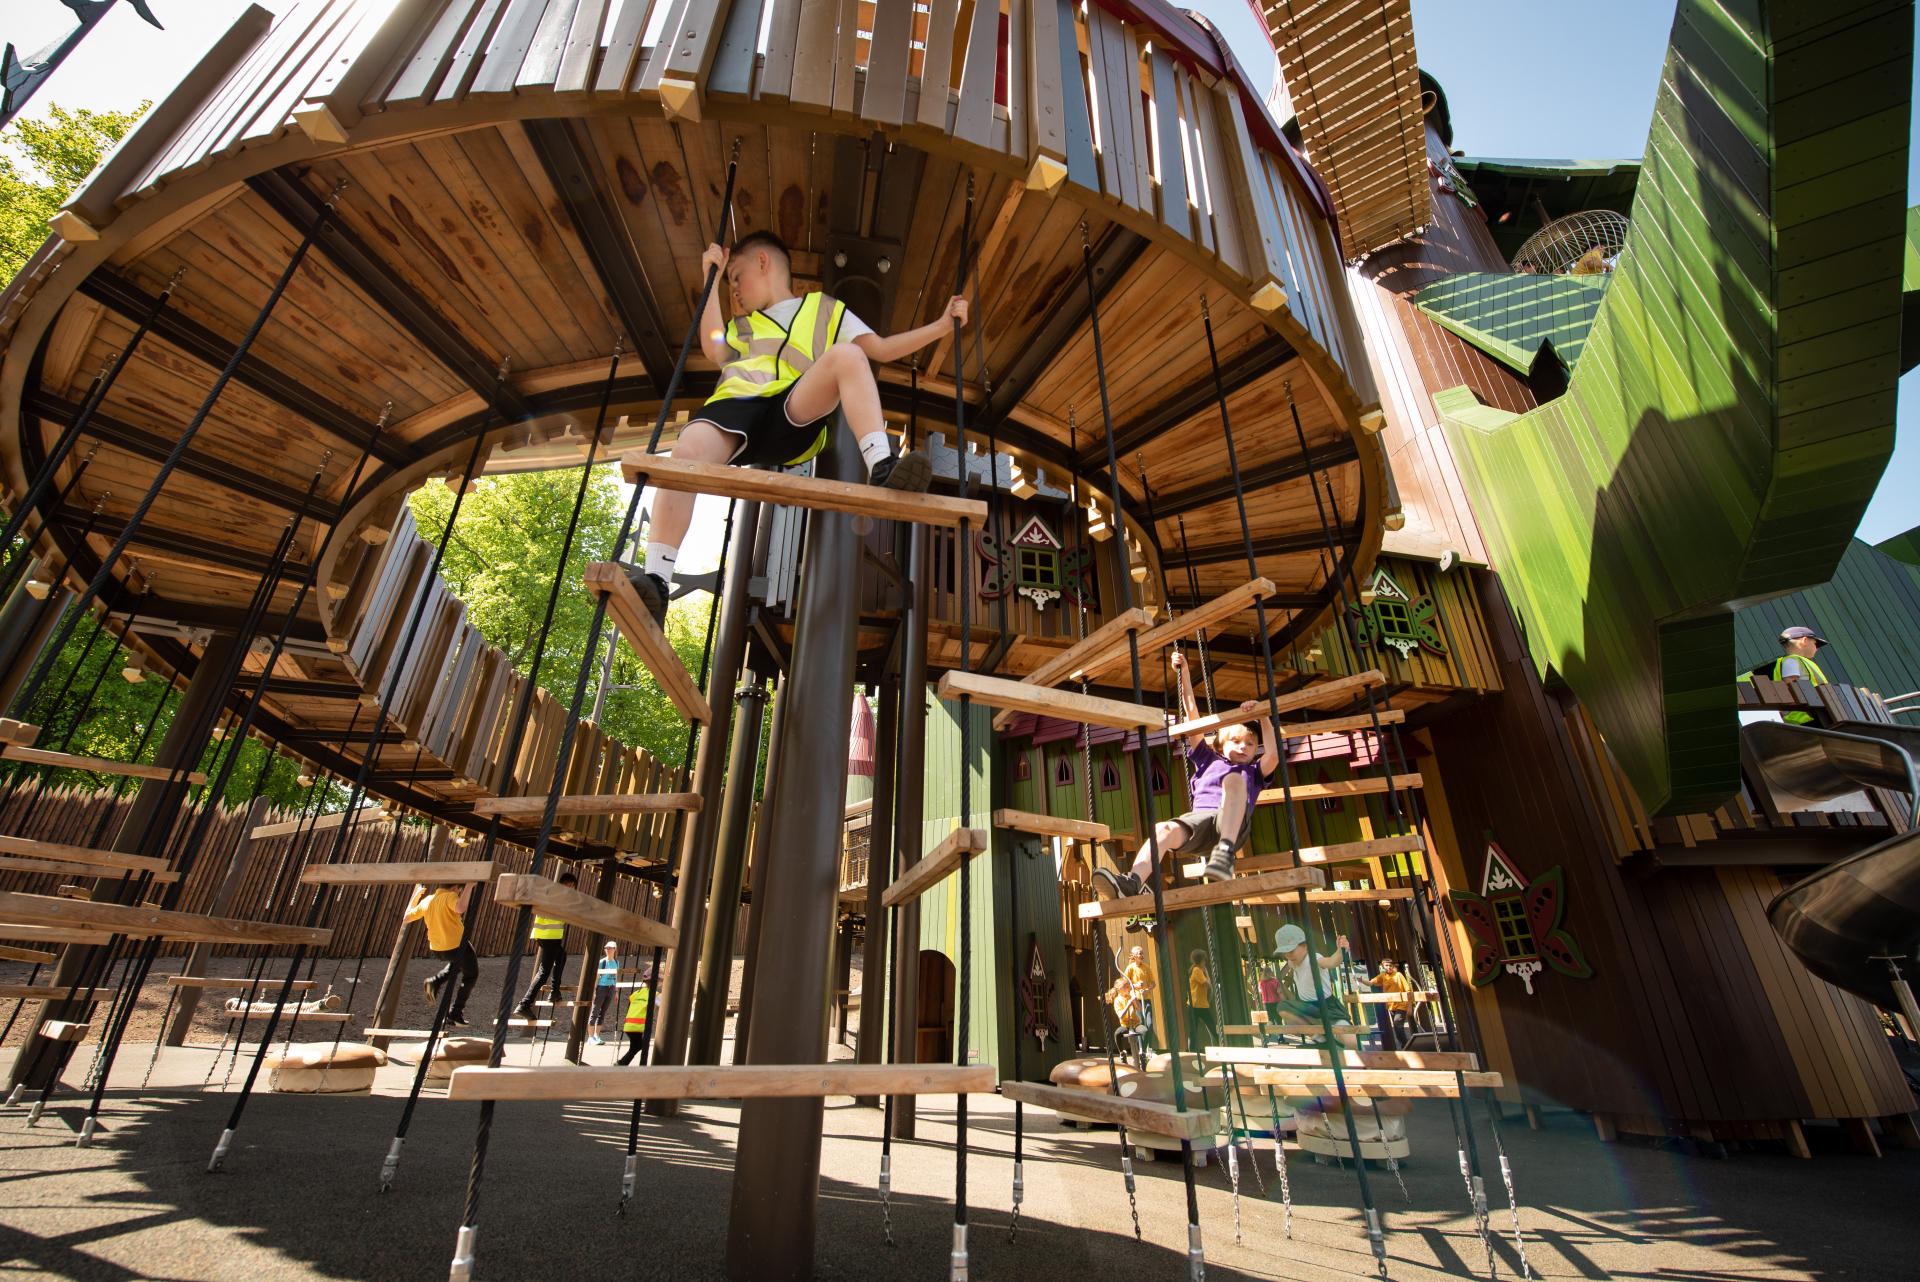 Kids climbing on playground structure at Lilidorei